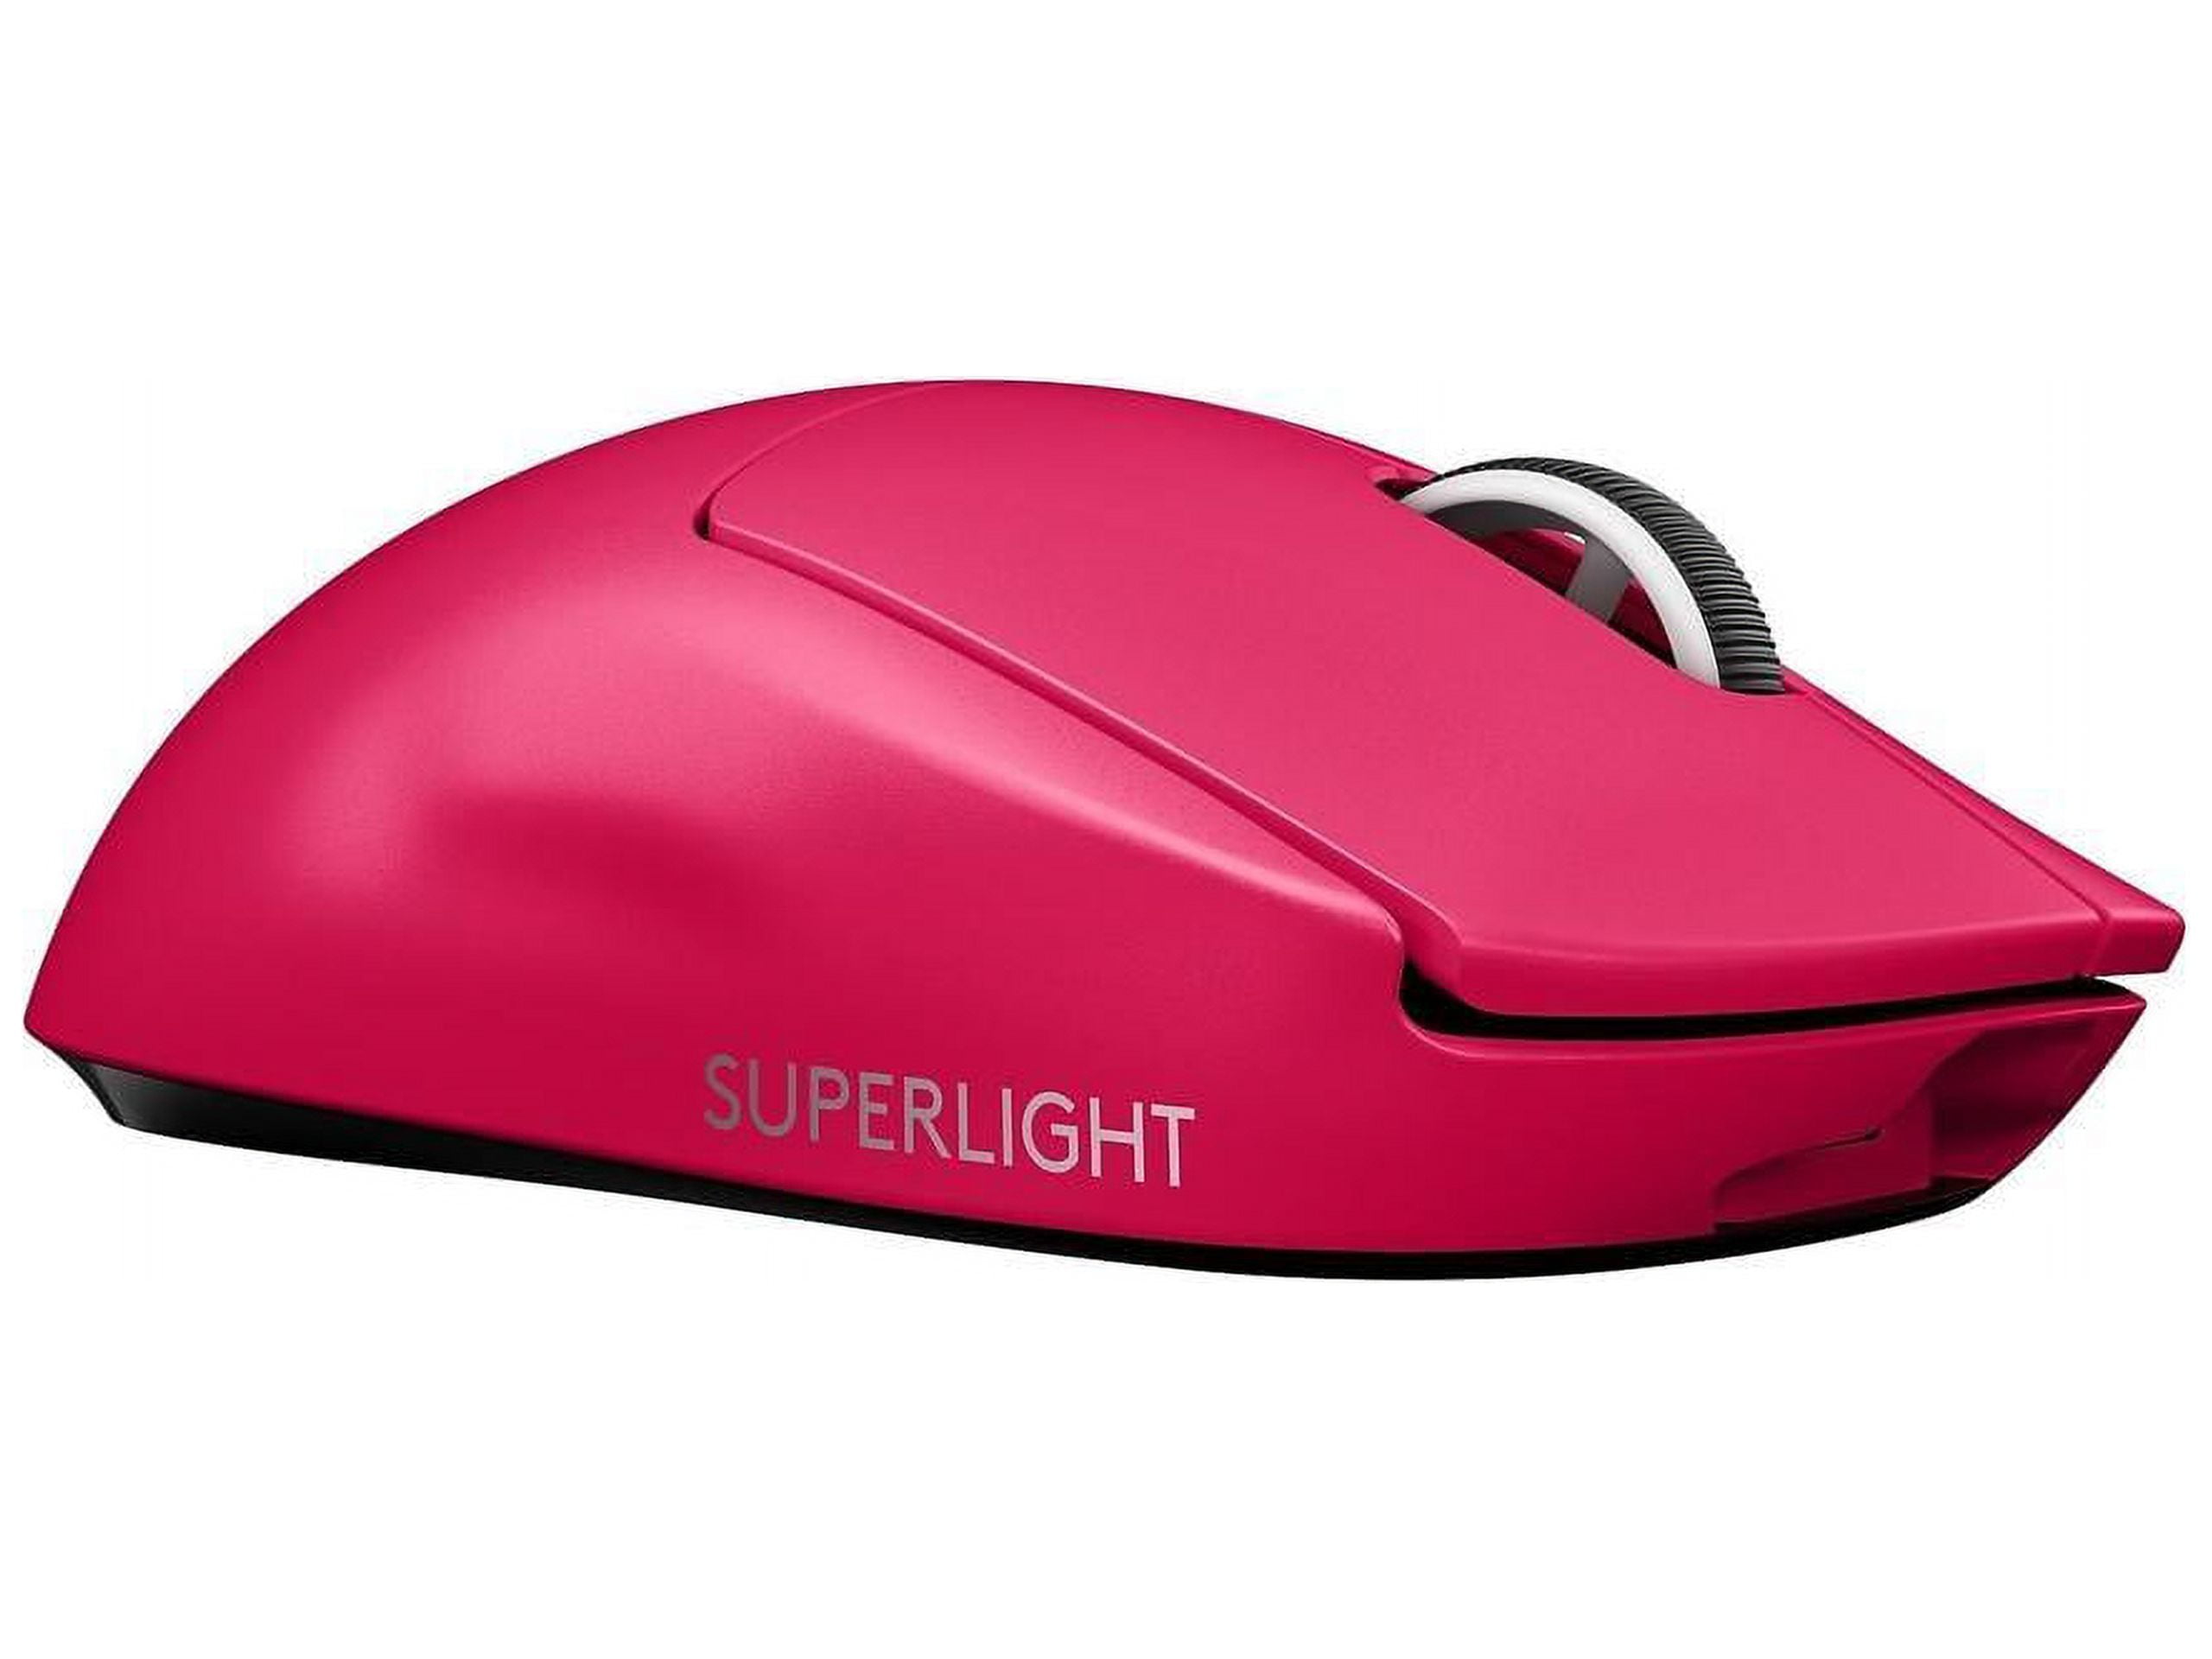 Logitech G PRO X SUPERLIGHT Wireless Gaming Mouse Ultra-Lightweight HERO  25K Sensor 25600 DPI 5